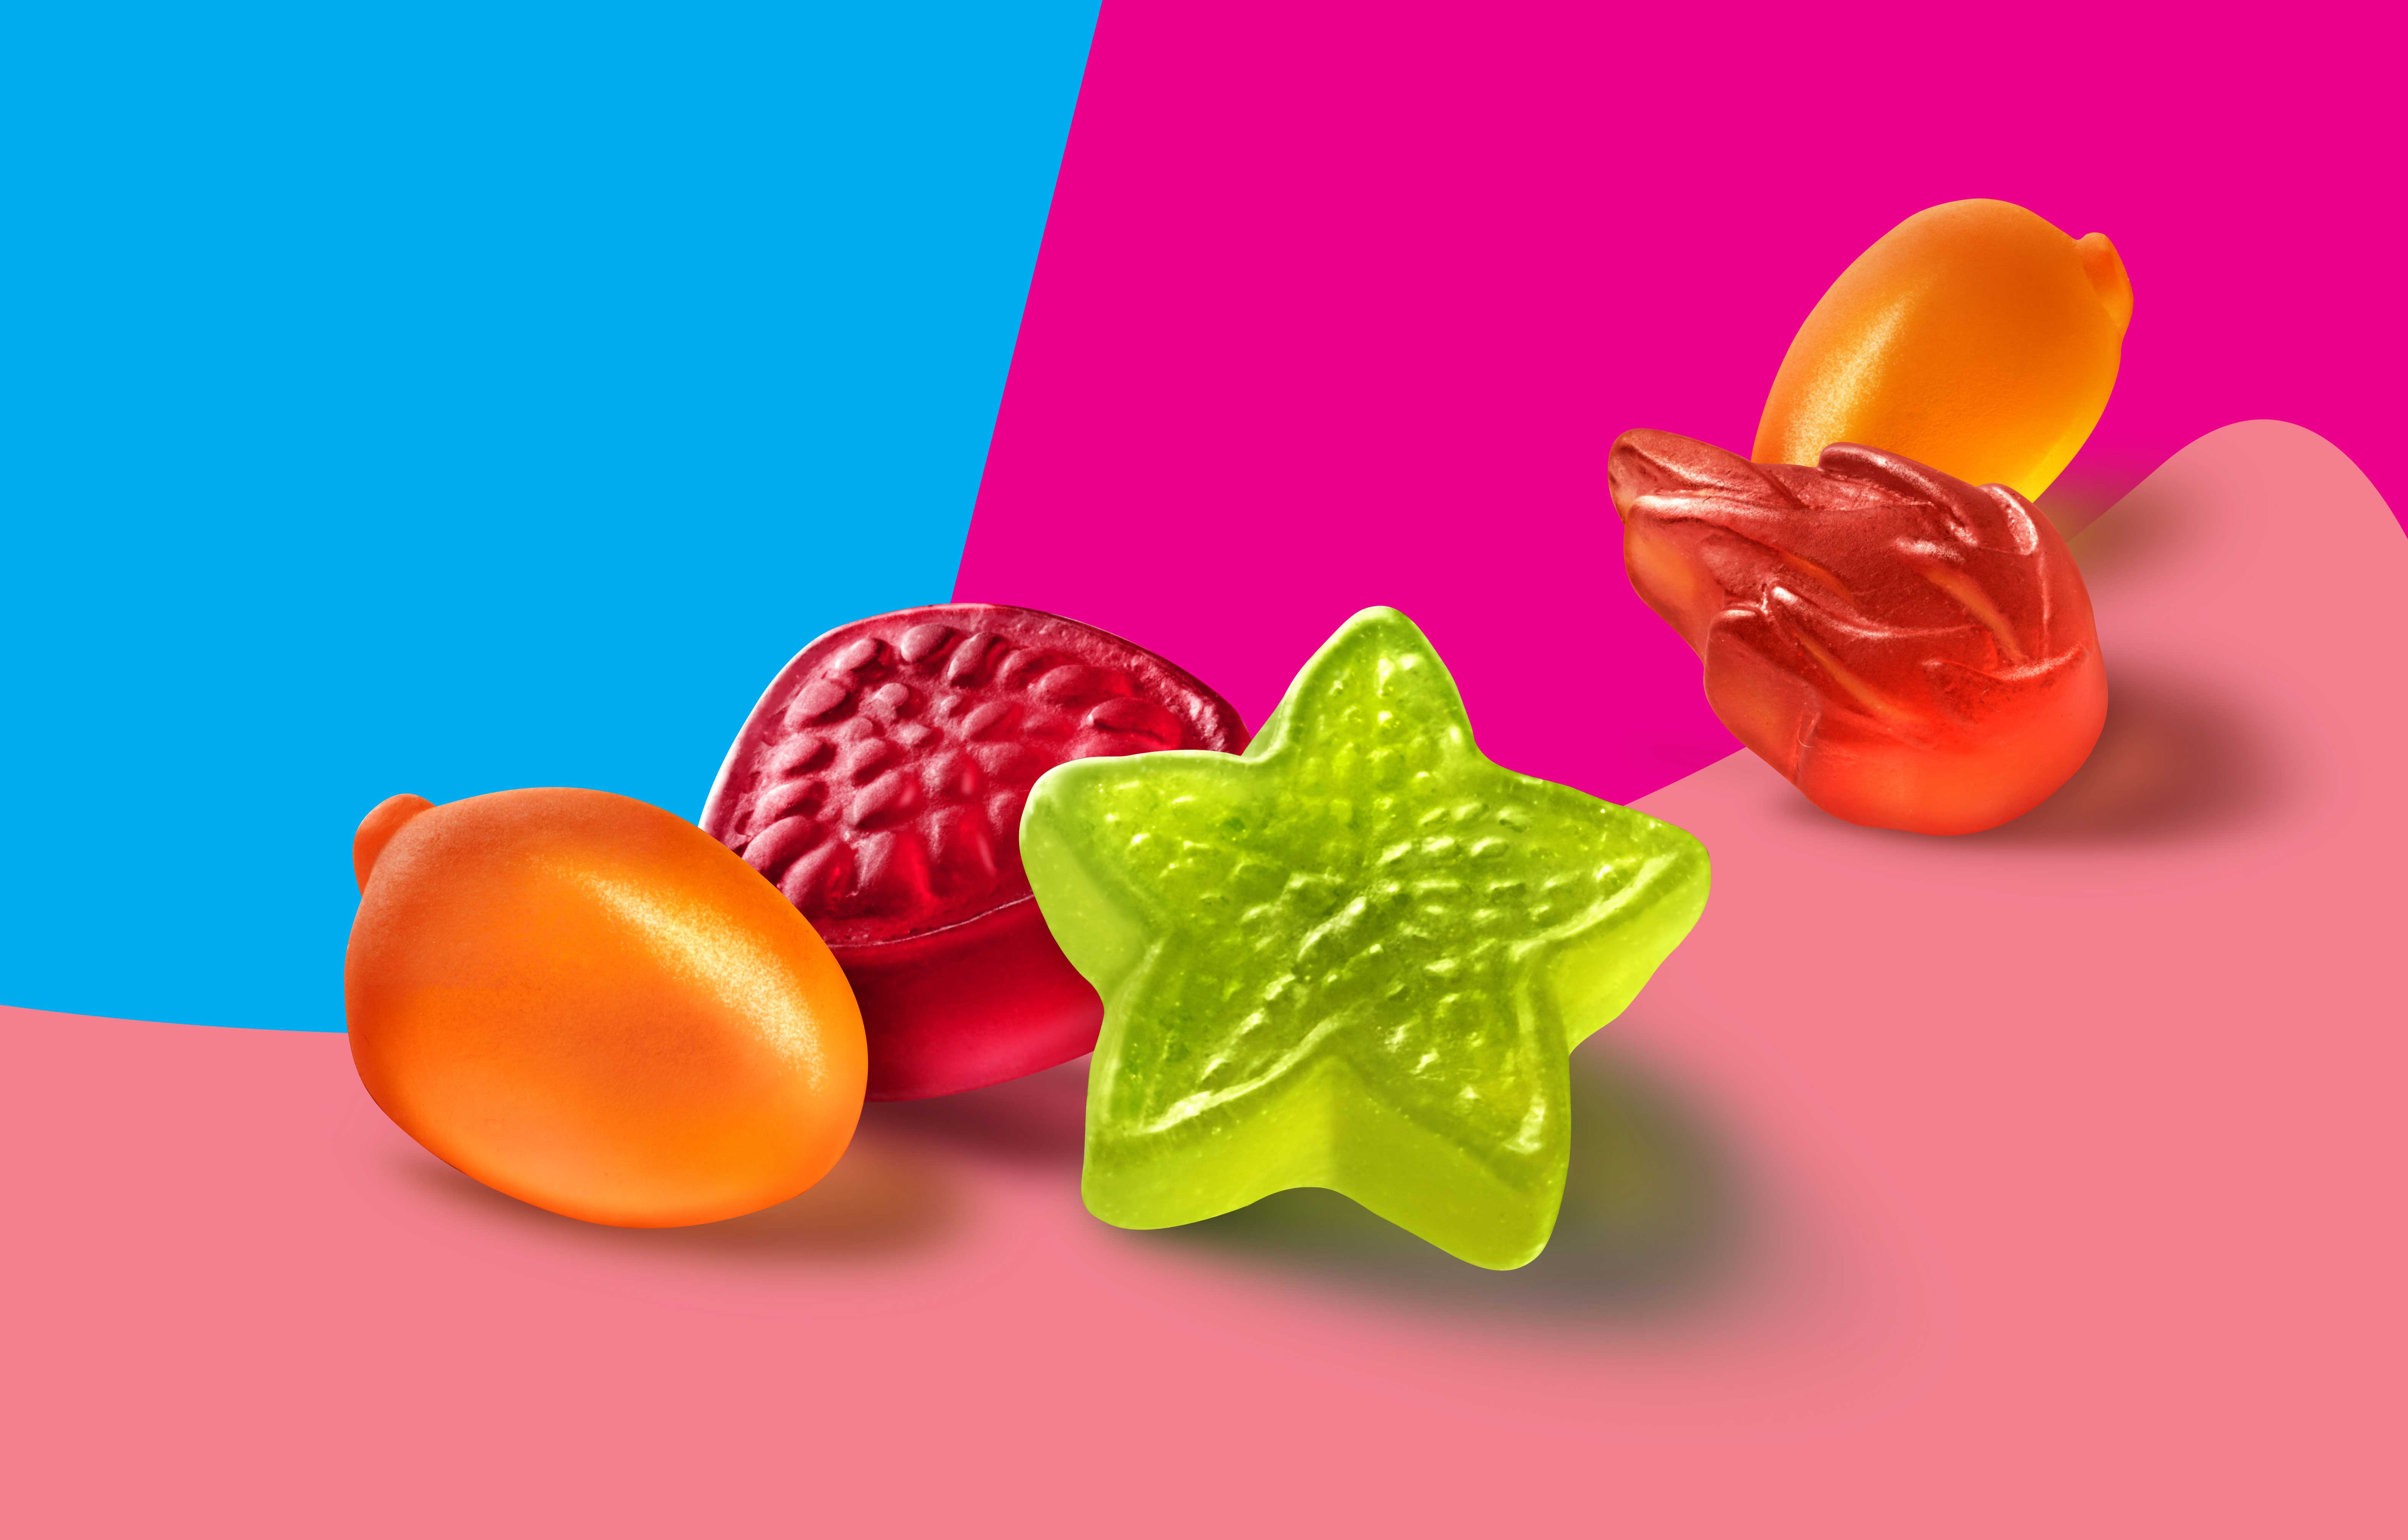 mike wepplo photoreal photography fruit snacks multiple shapes